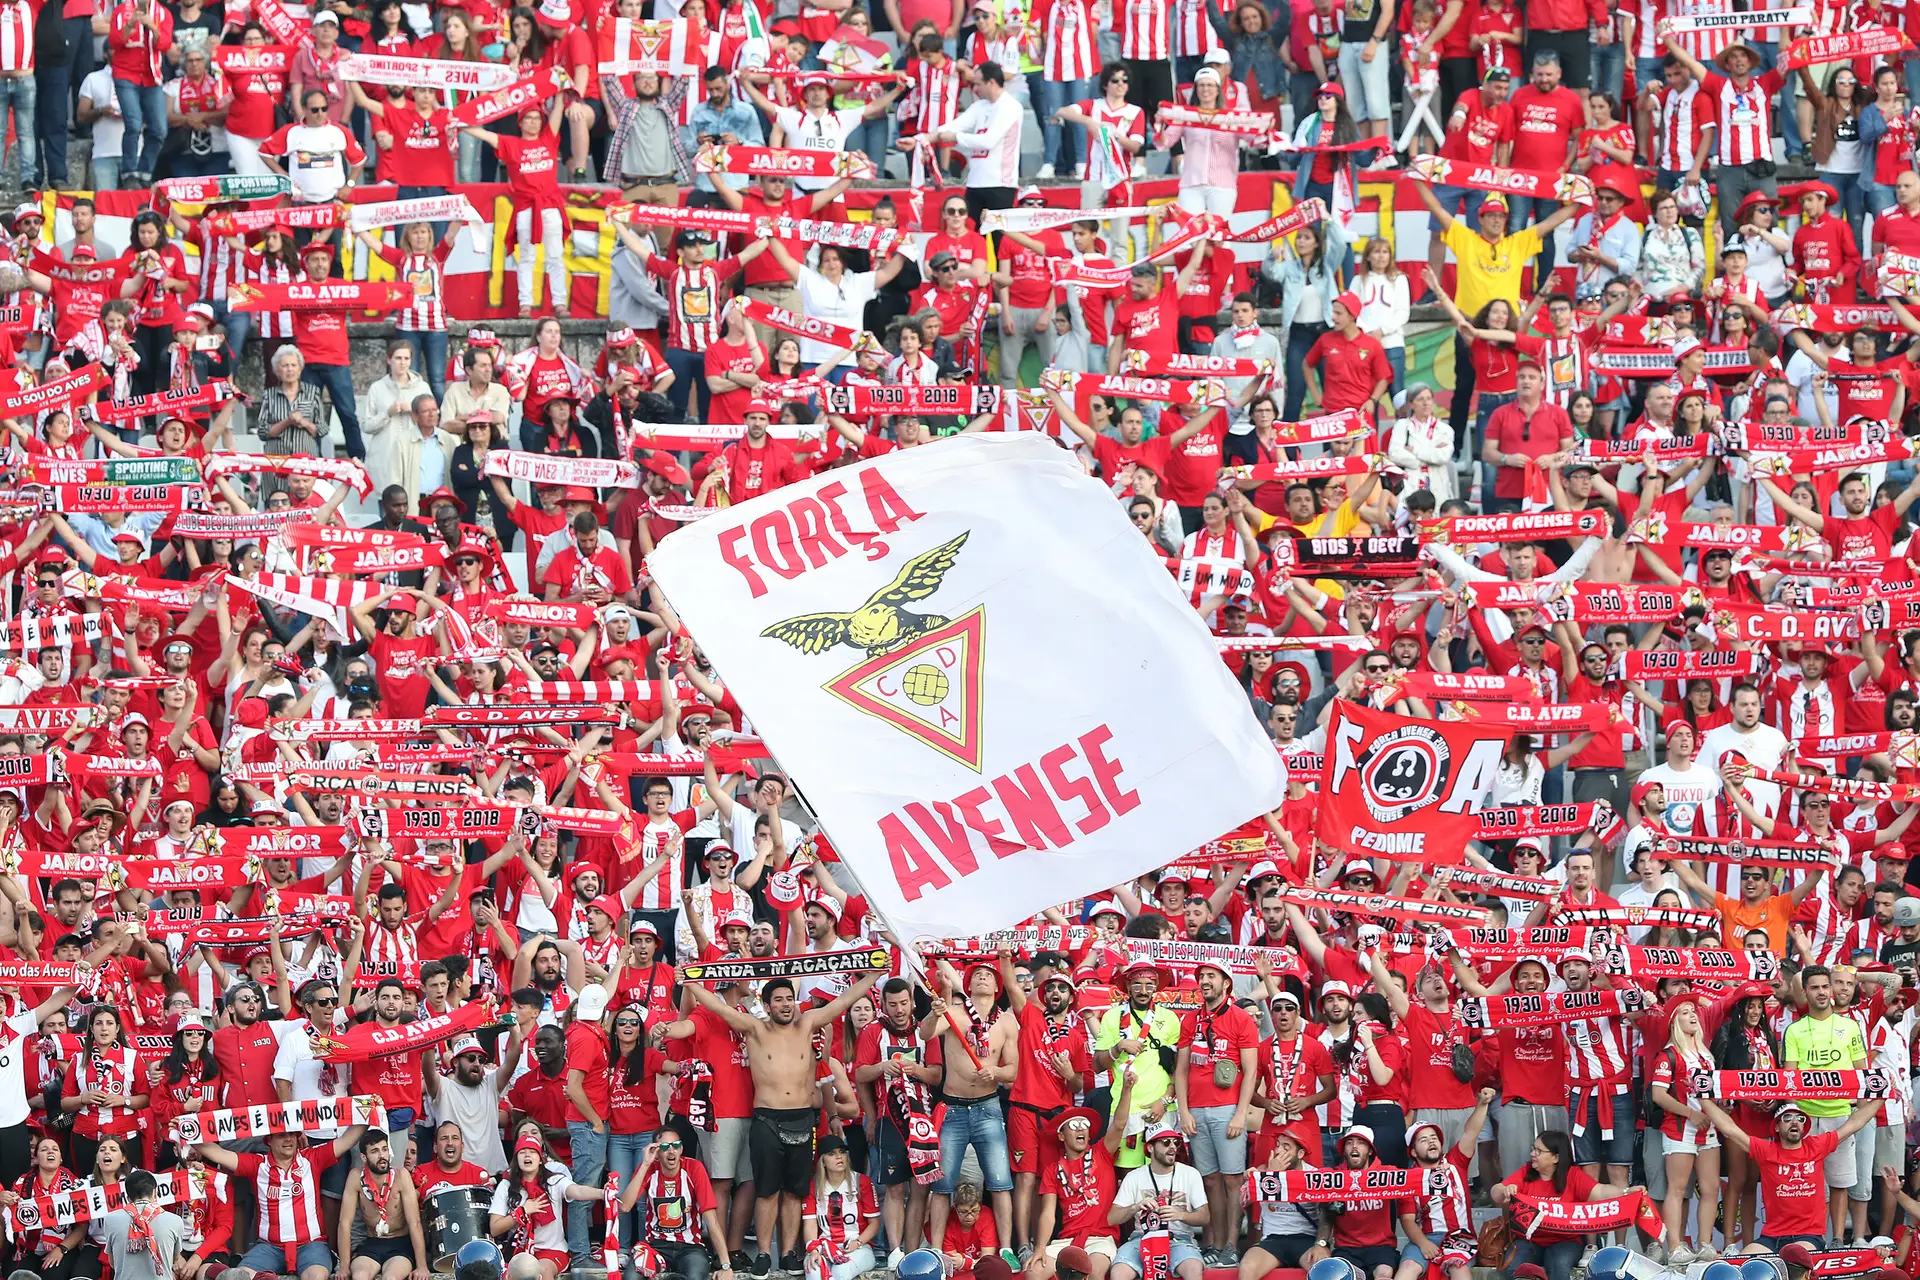 𝐂𝐀𝐌𝐏𝐀𝐍𝐇𝐀 𝟑𝐗𝟐: 𝐅𝐀𝐒𝐄 𝐒𝐔𝐁𝐈𝐃𝐀 𝐋𝐈𝐆𝐀 𝟑 Atlético Clube  de Portugal - Site Oficial